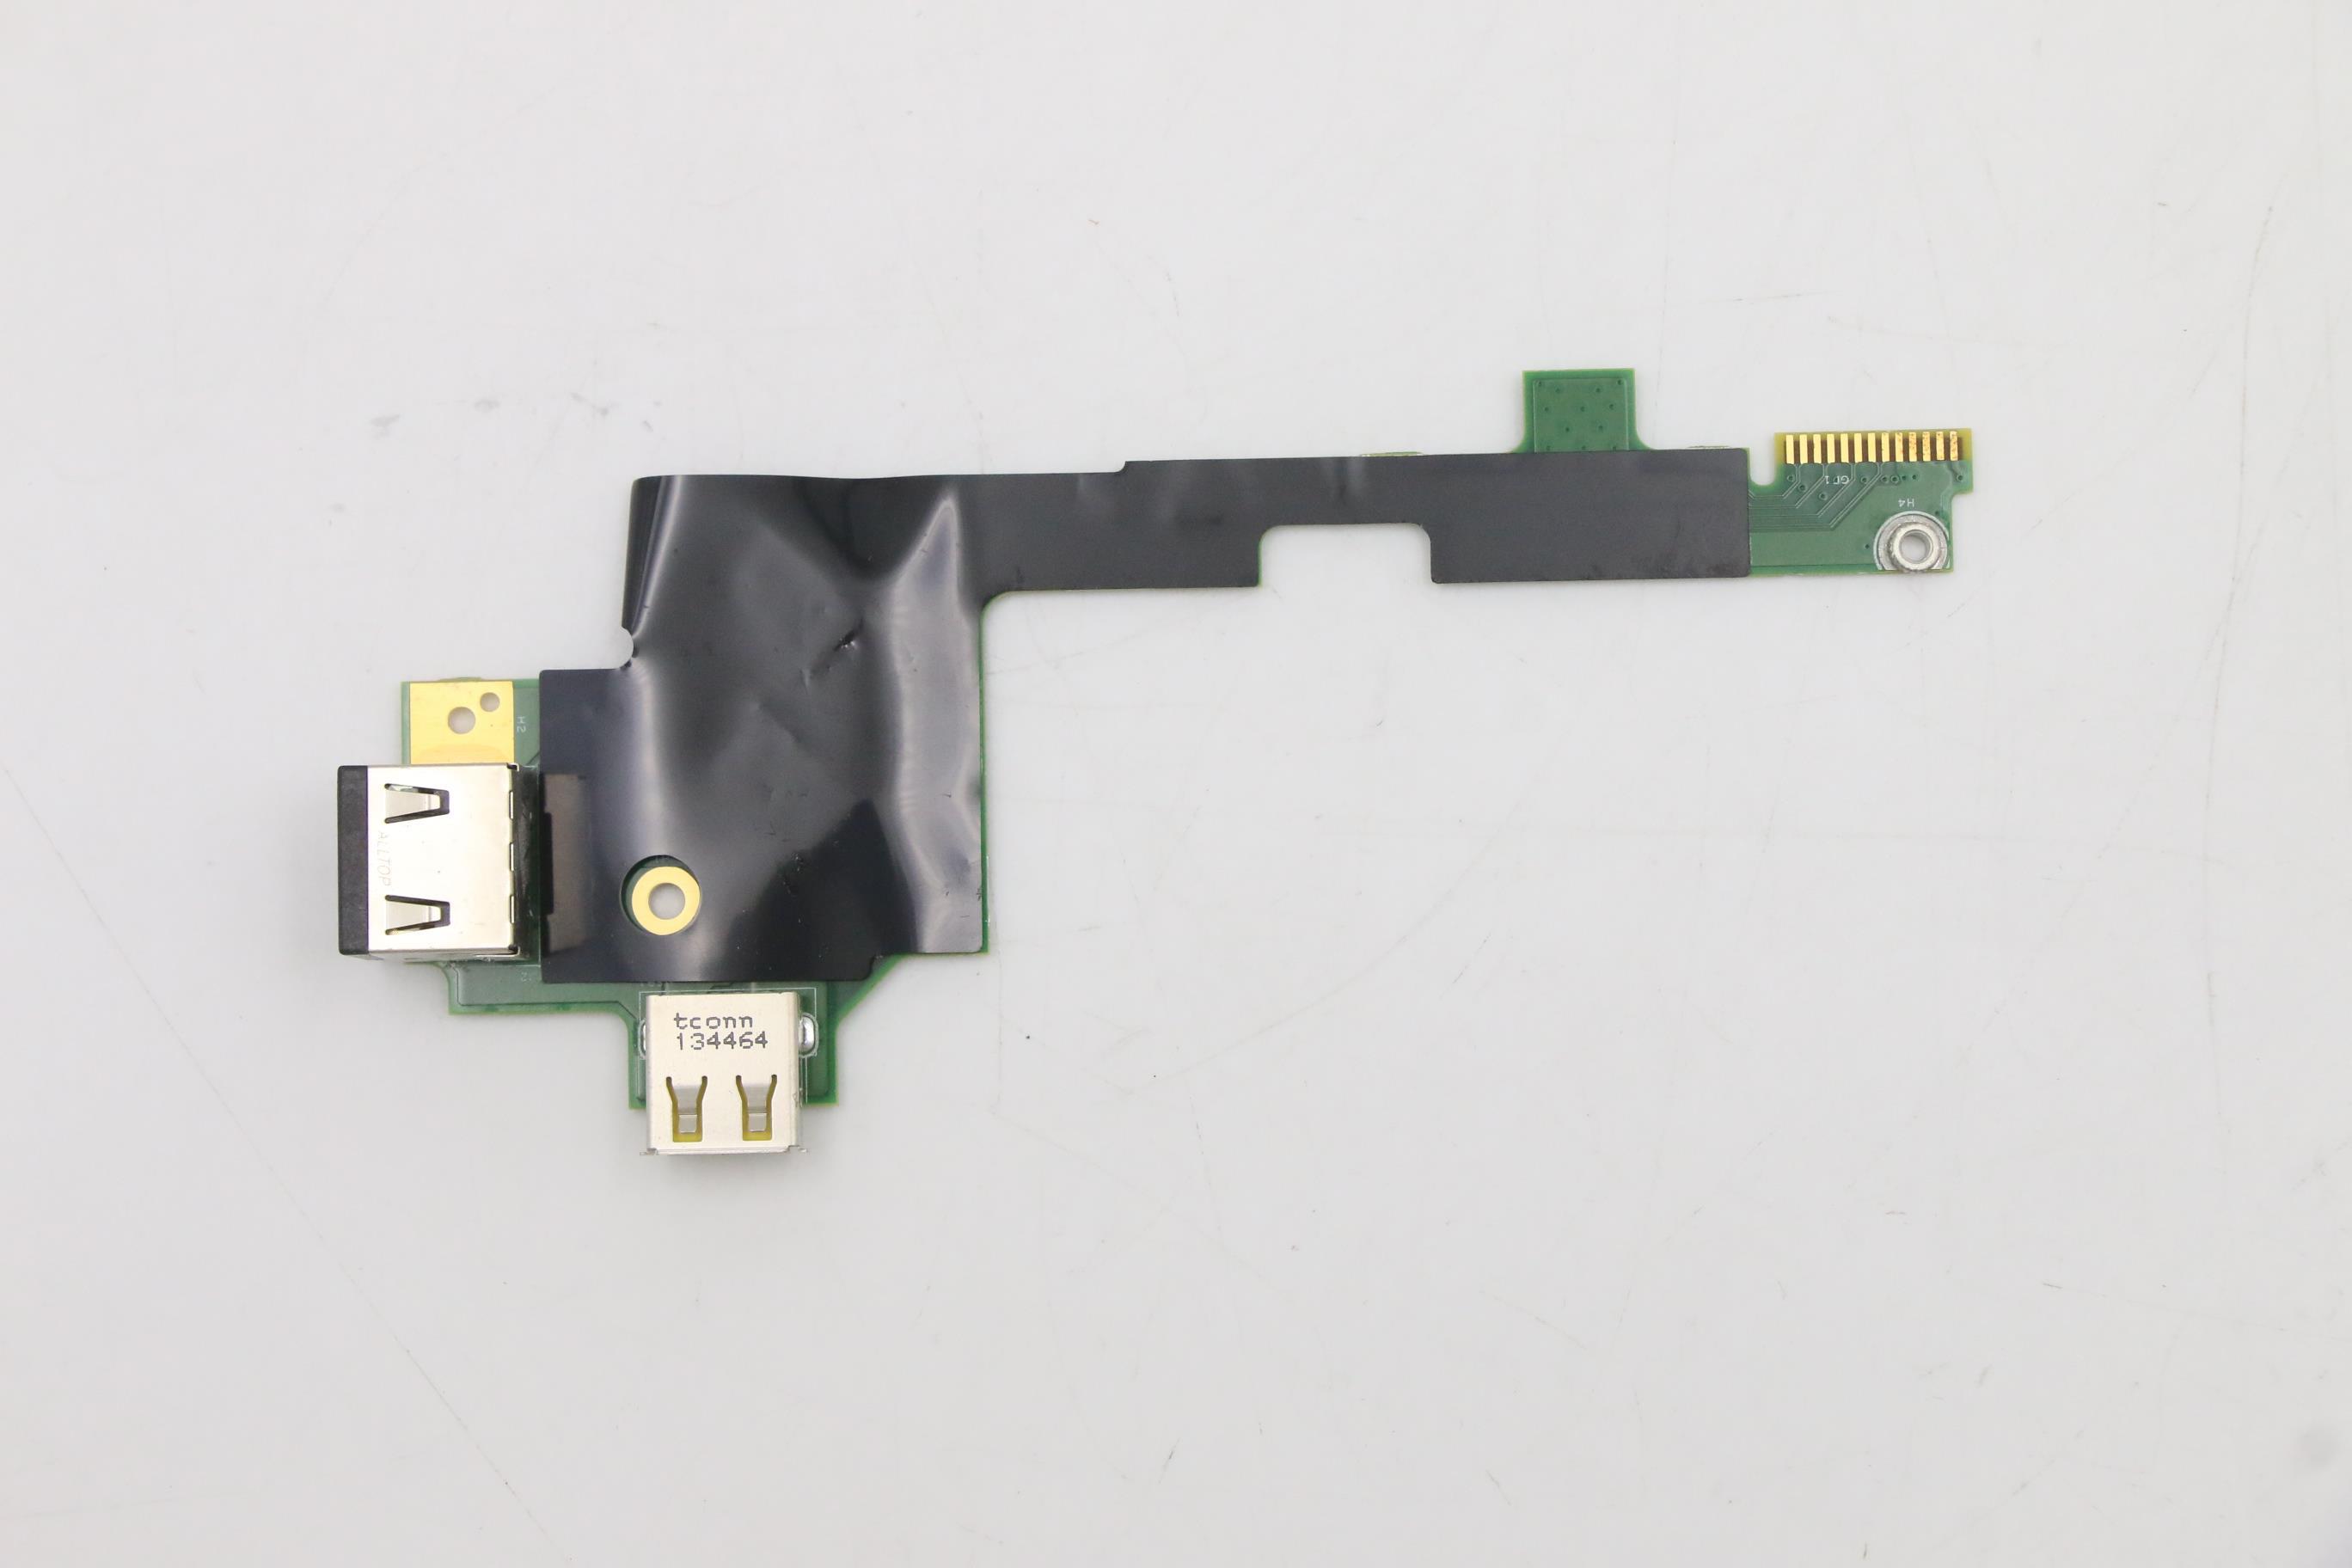 Thinkpad T530 W530 USB RJ45 Subcard 04W6898